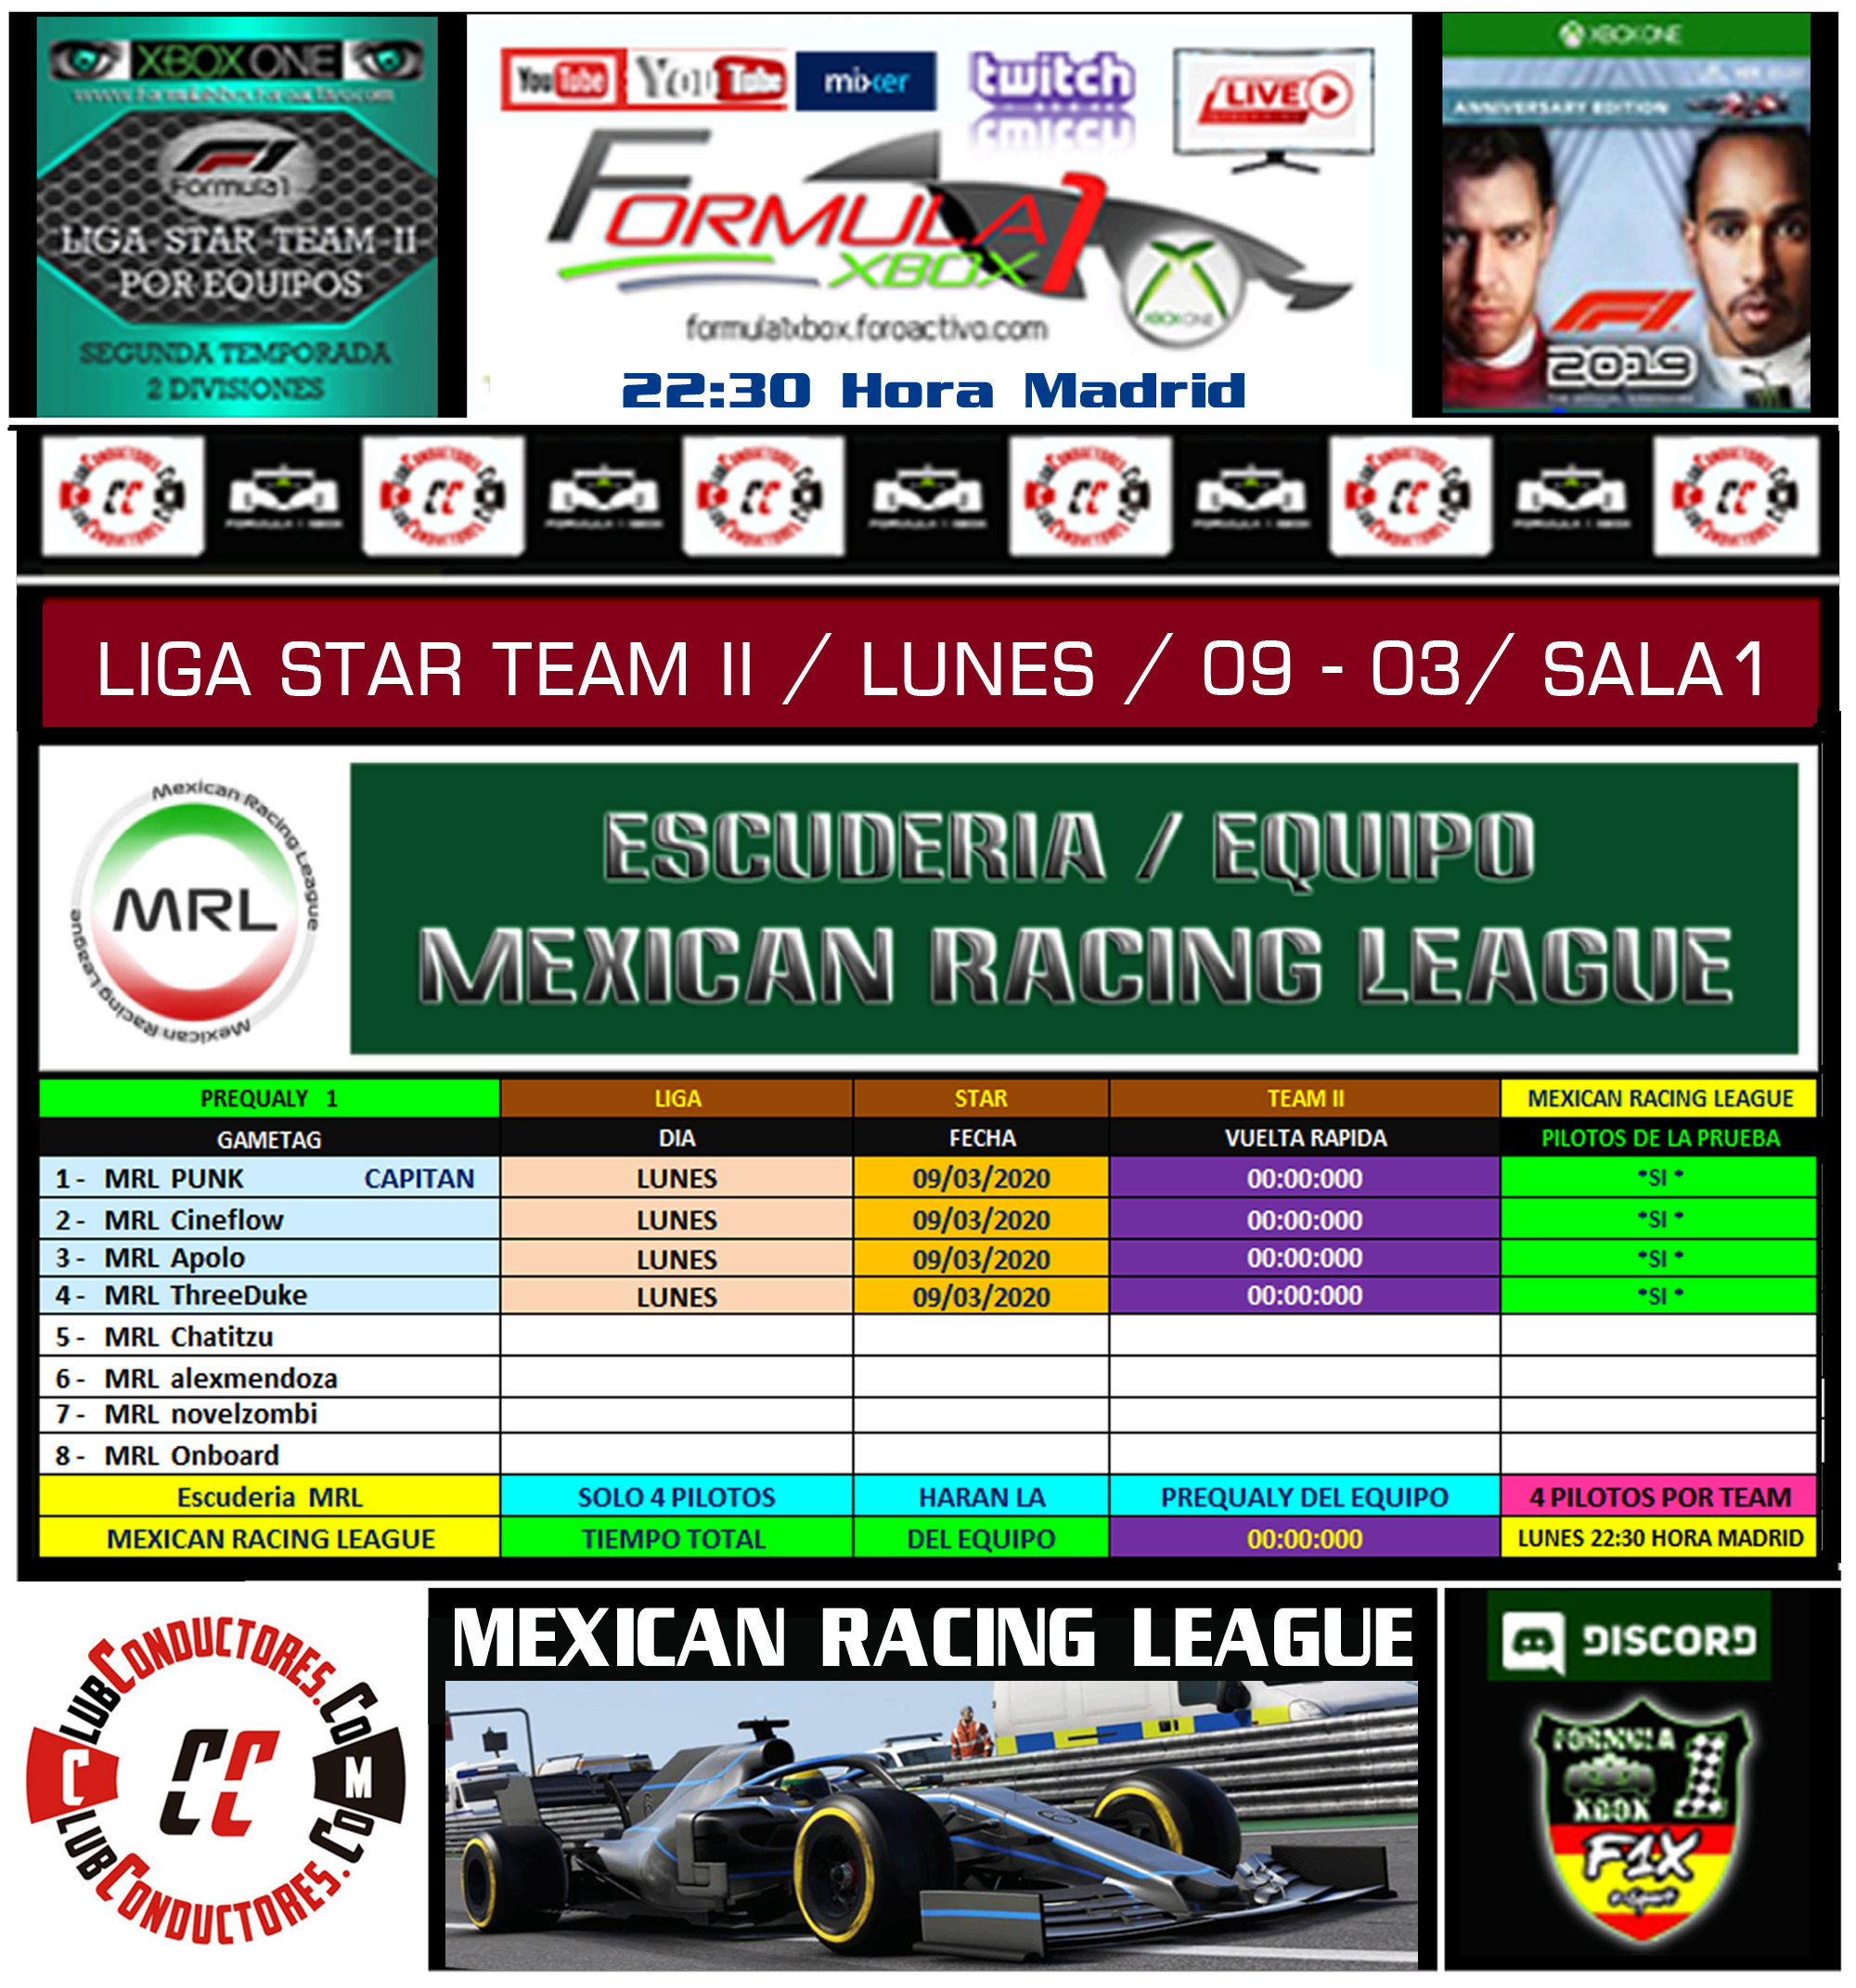 F1 2019 - XBOX ONE / LIGA STAR TEAM II - F1X / ESCUDERIA MEXICAN RACING LEAGUE Mrl_lu10